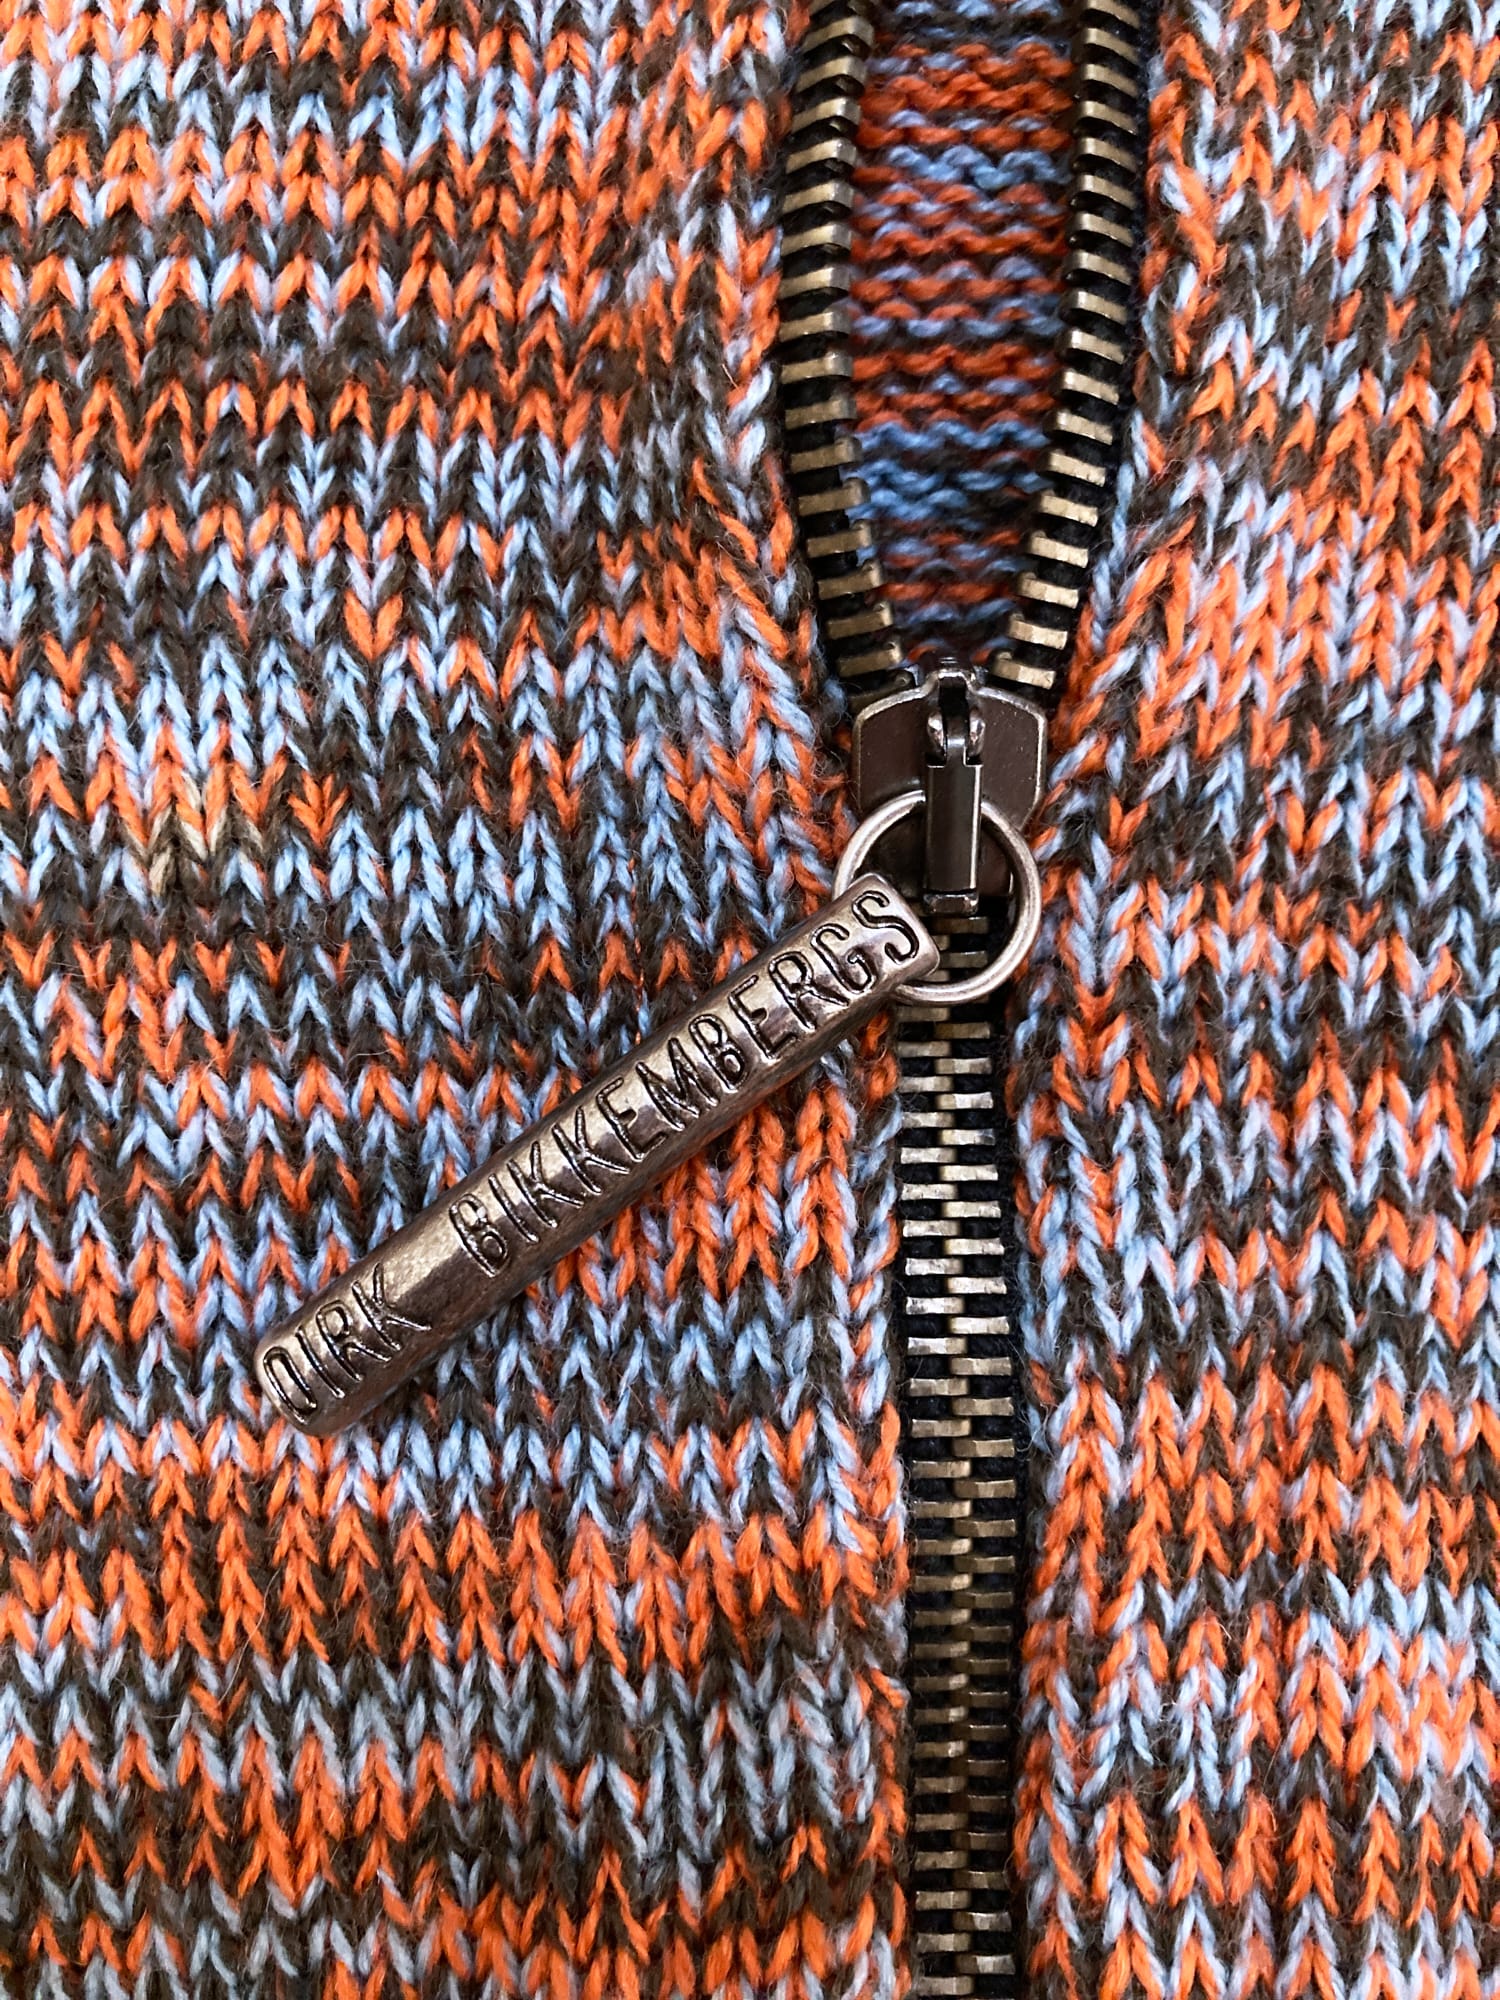 Dirk Bikkembergs Hommes Pour La Femme winter 1996 orange wool marle zip cardigan